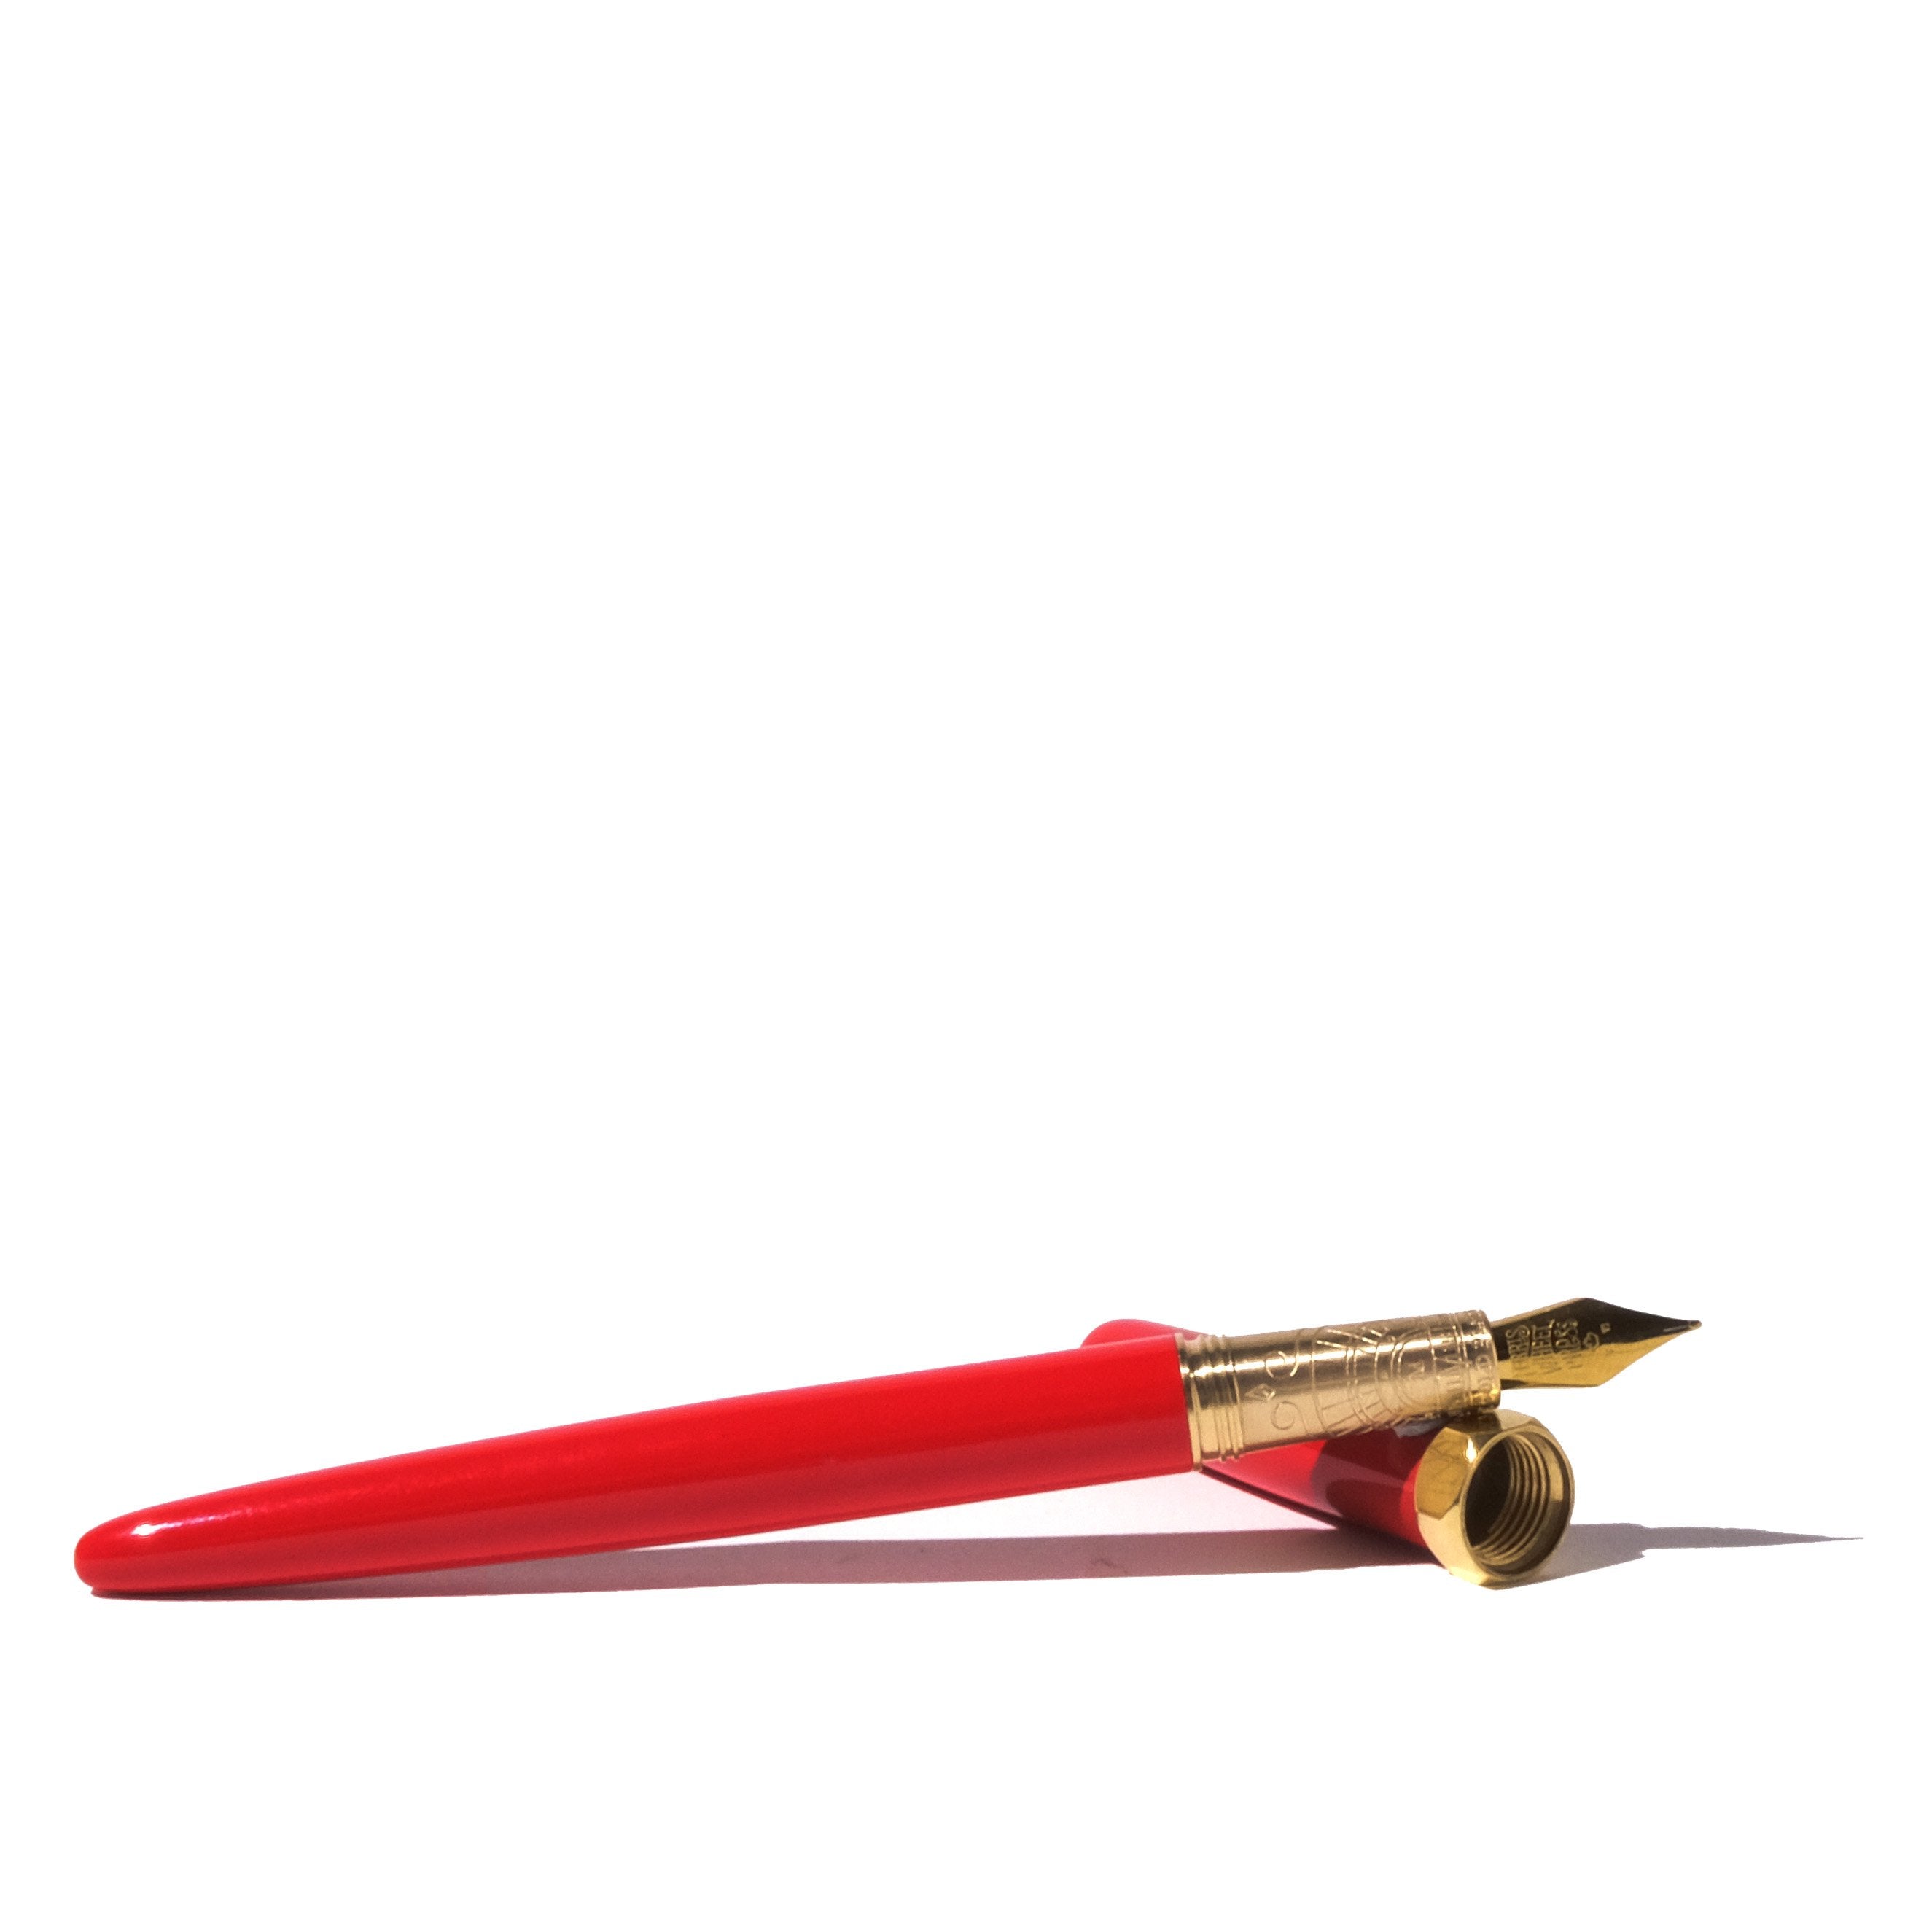 Red Carpet Brush Fountain Pen - Gold Plated Nib